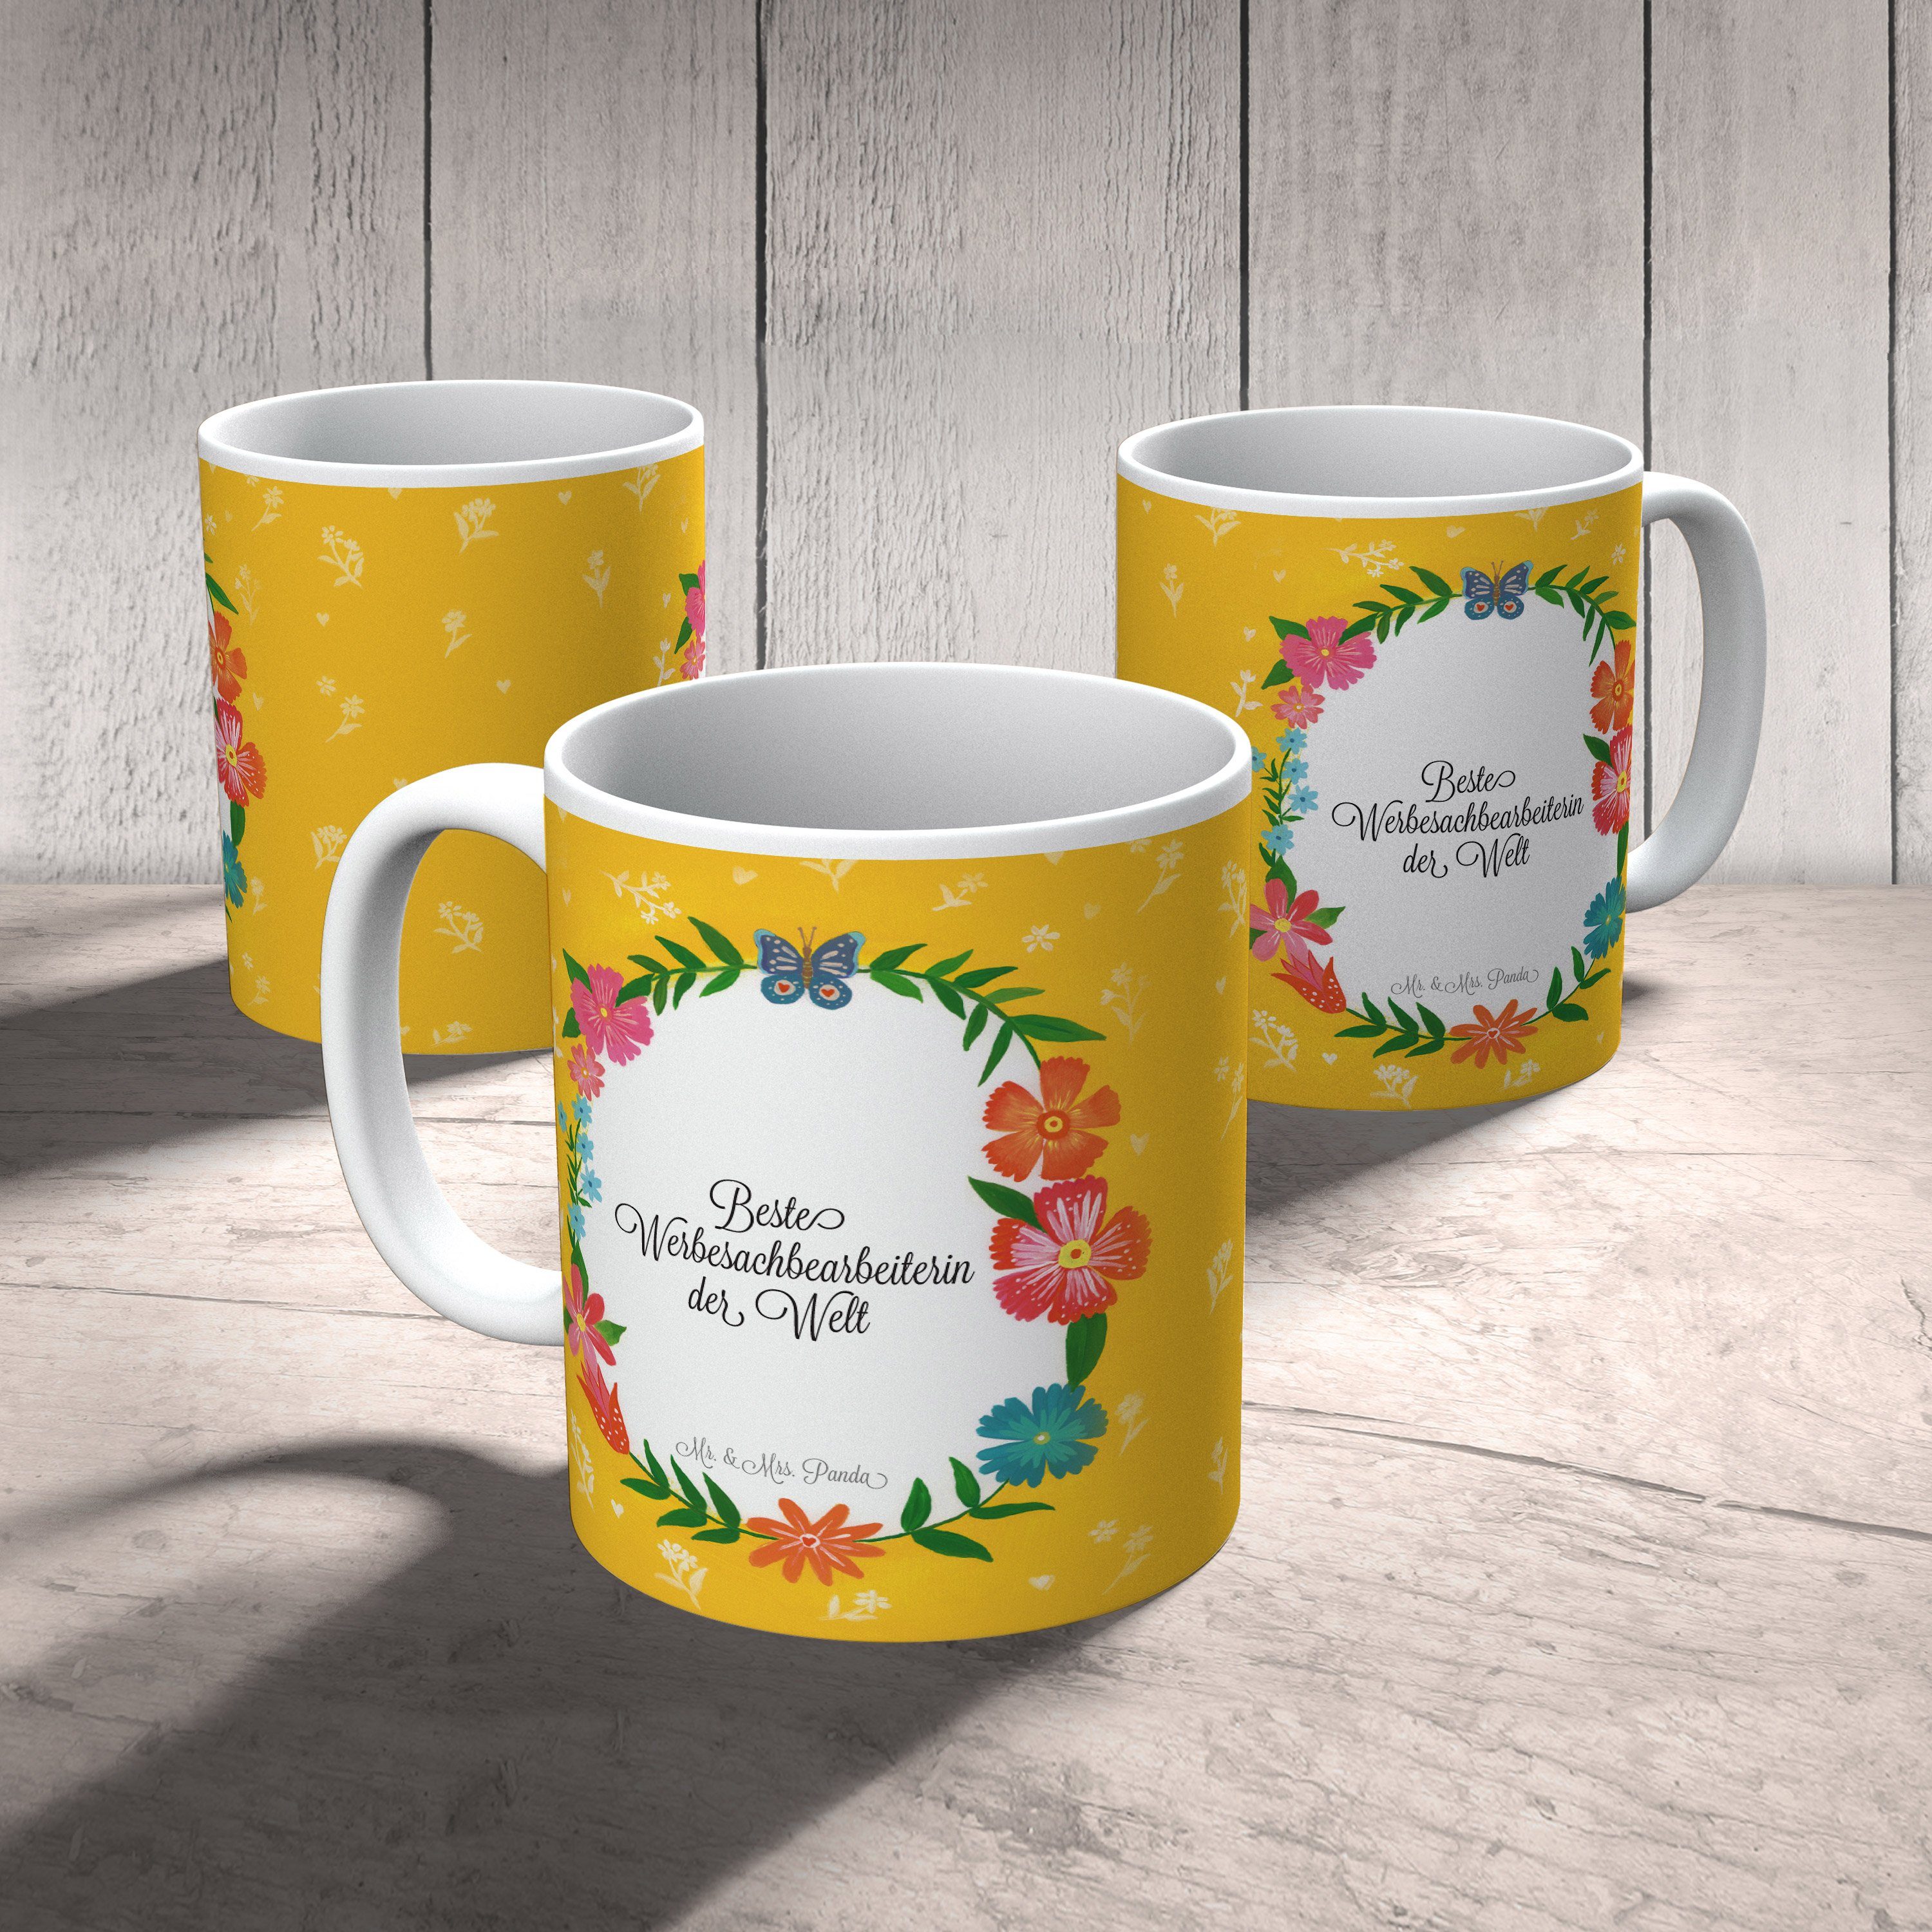 Mr. & Mrs. Panda - Werbesachbearbeiterin Keramik Keramikt, Geschenk, Tasse Kaffeebecher, Gratulation